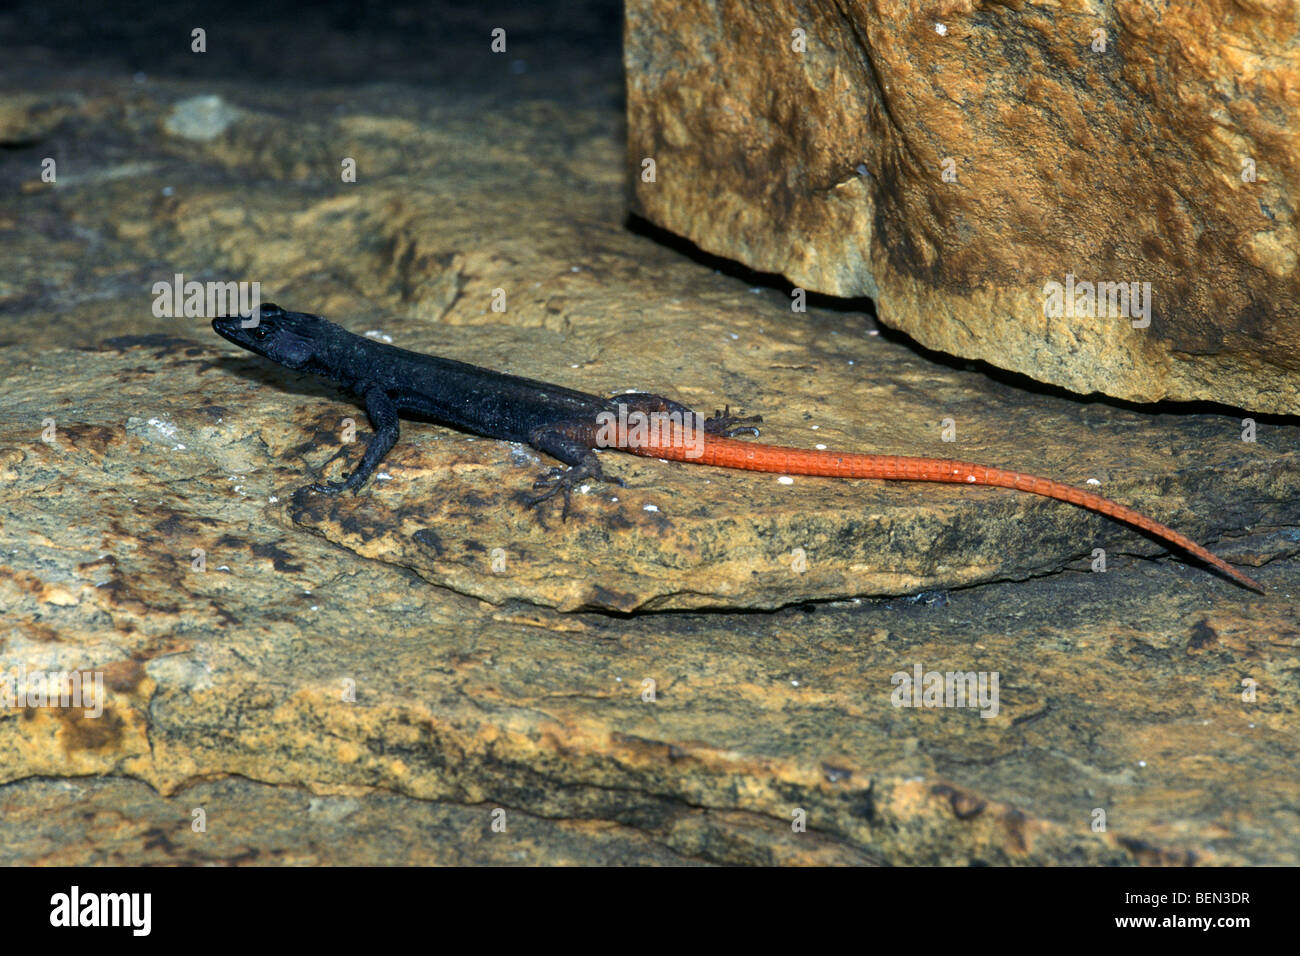 Lebombo flat lizard sunning on rock (Platysaurus lebomboensis), Kruger NP, South Africa Stock Photo